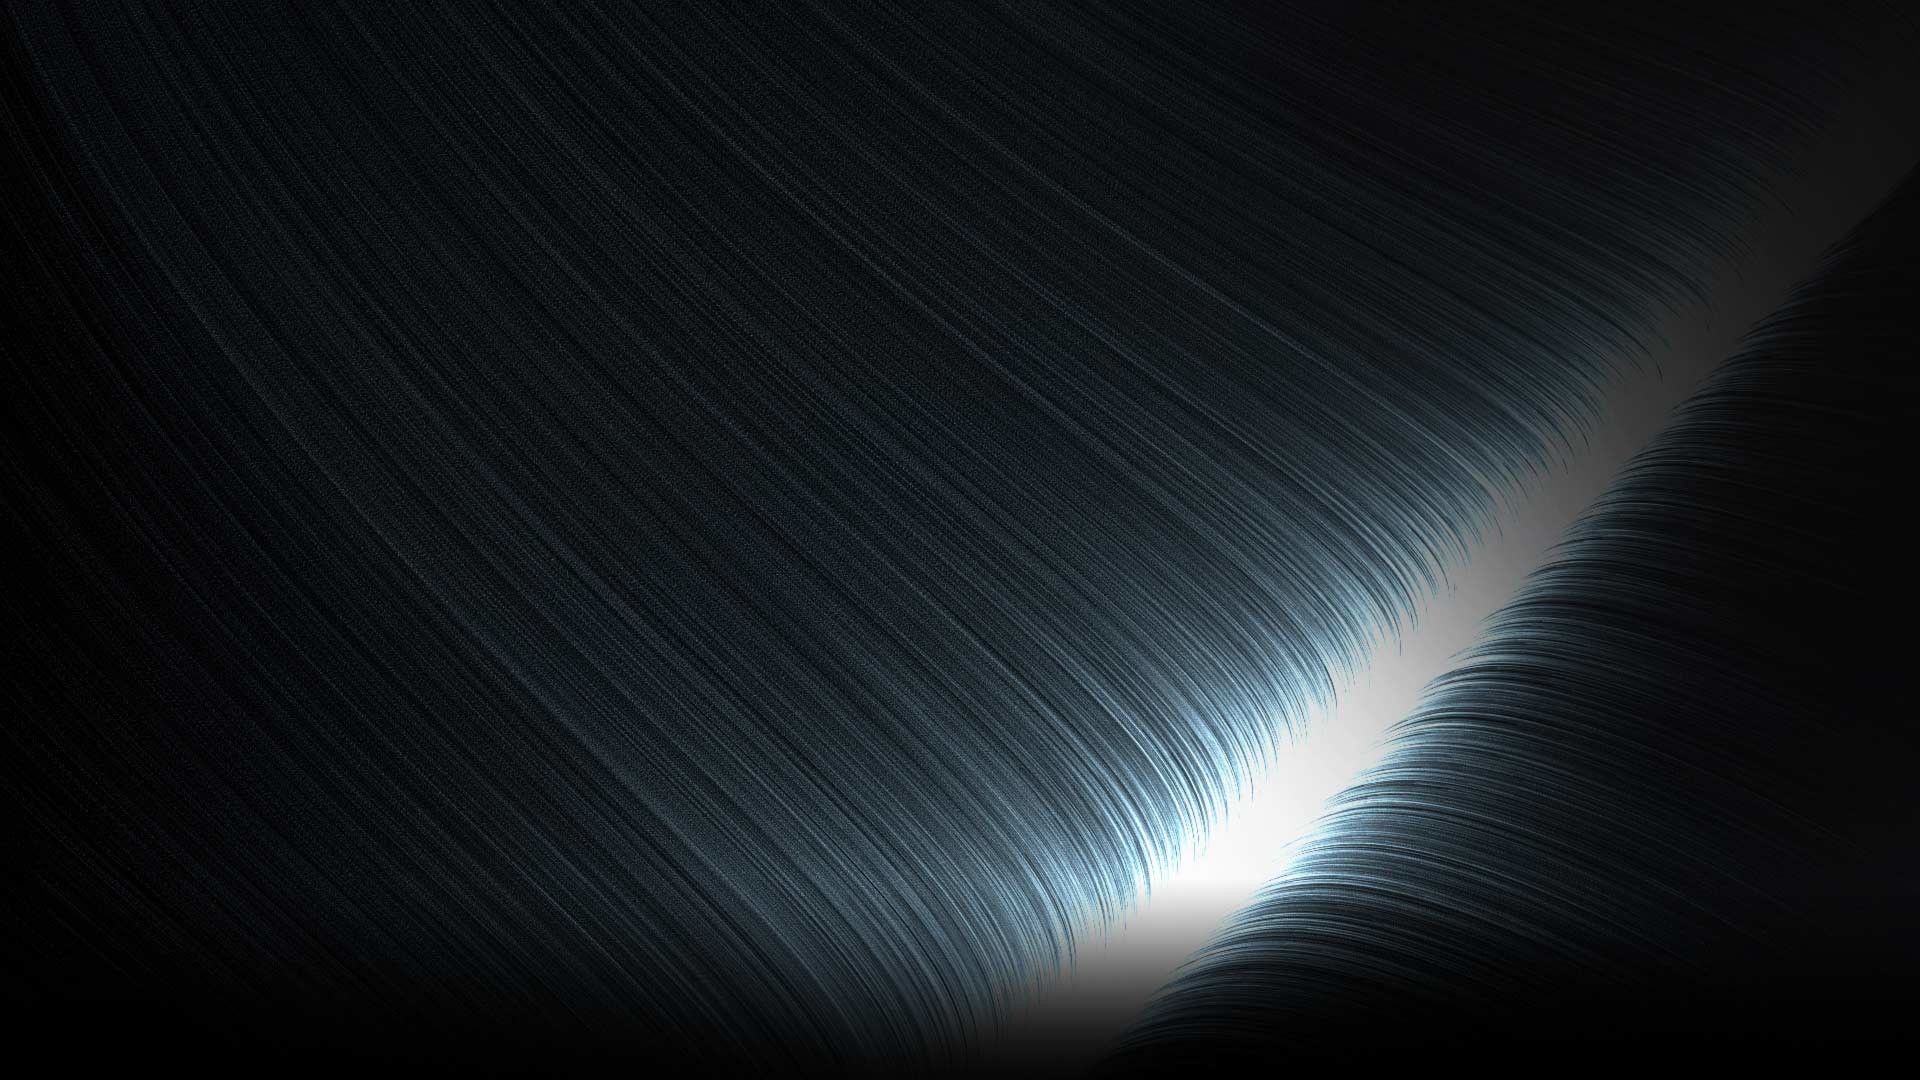 量子物理学の壁紙 黒 空 雰囲気 闇 光 Wallpaperuse